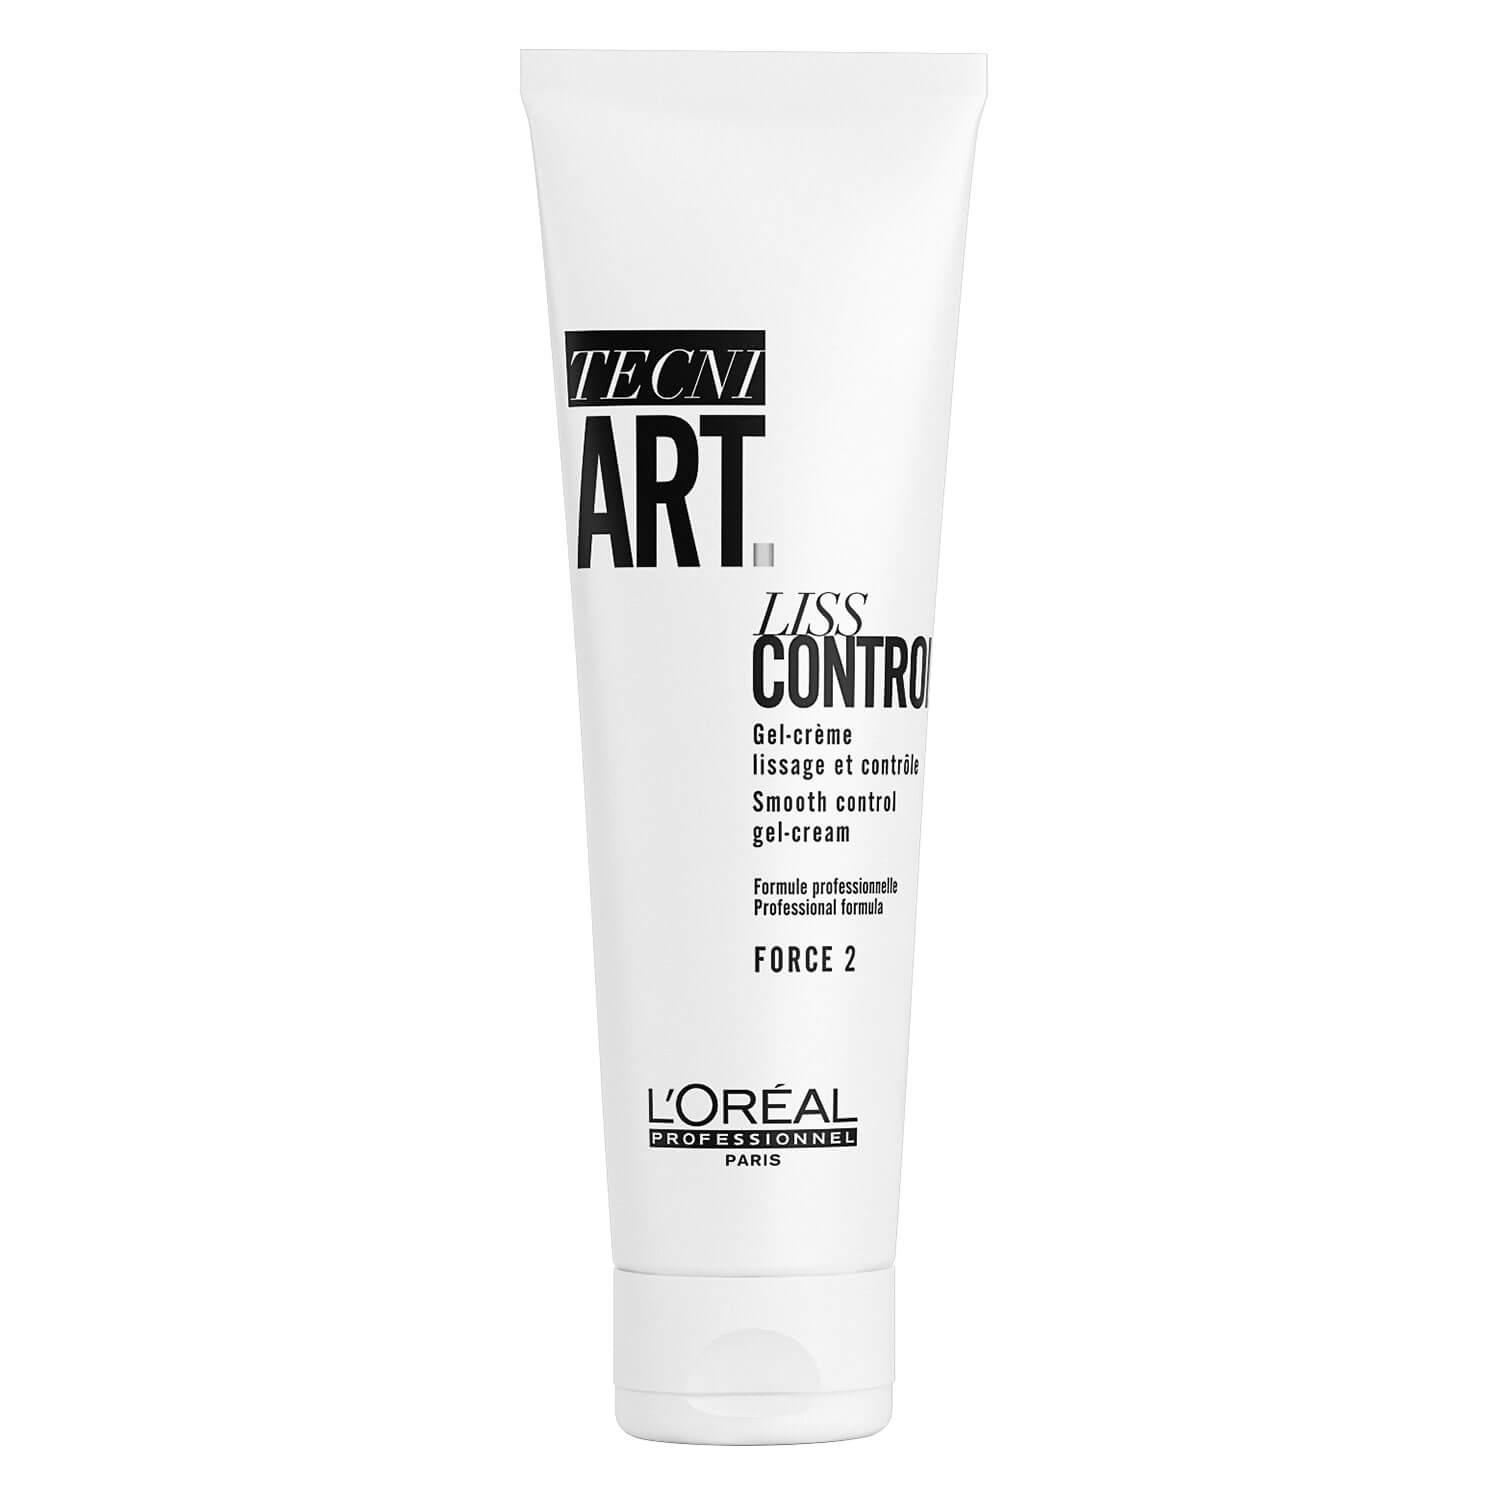 Tecni.art Essentials - Liss Control